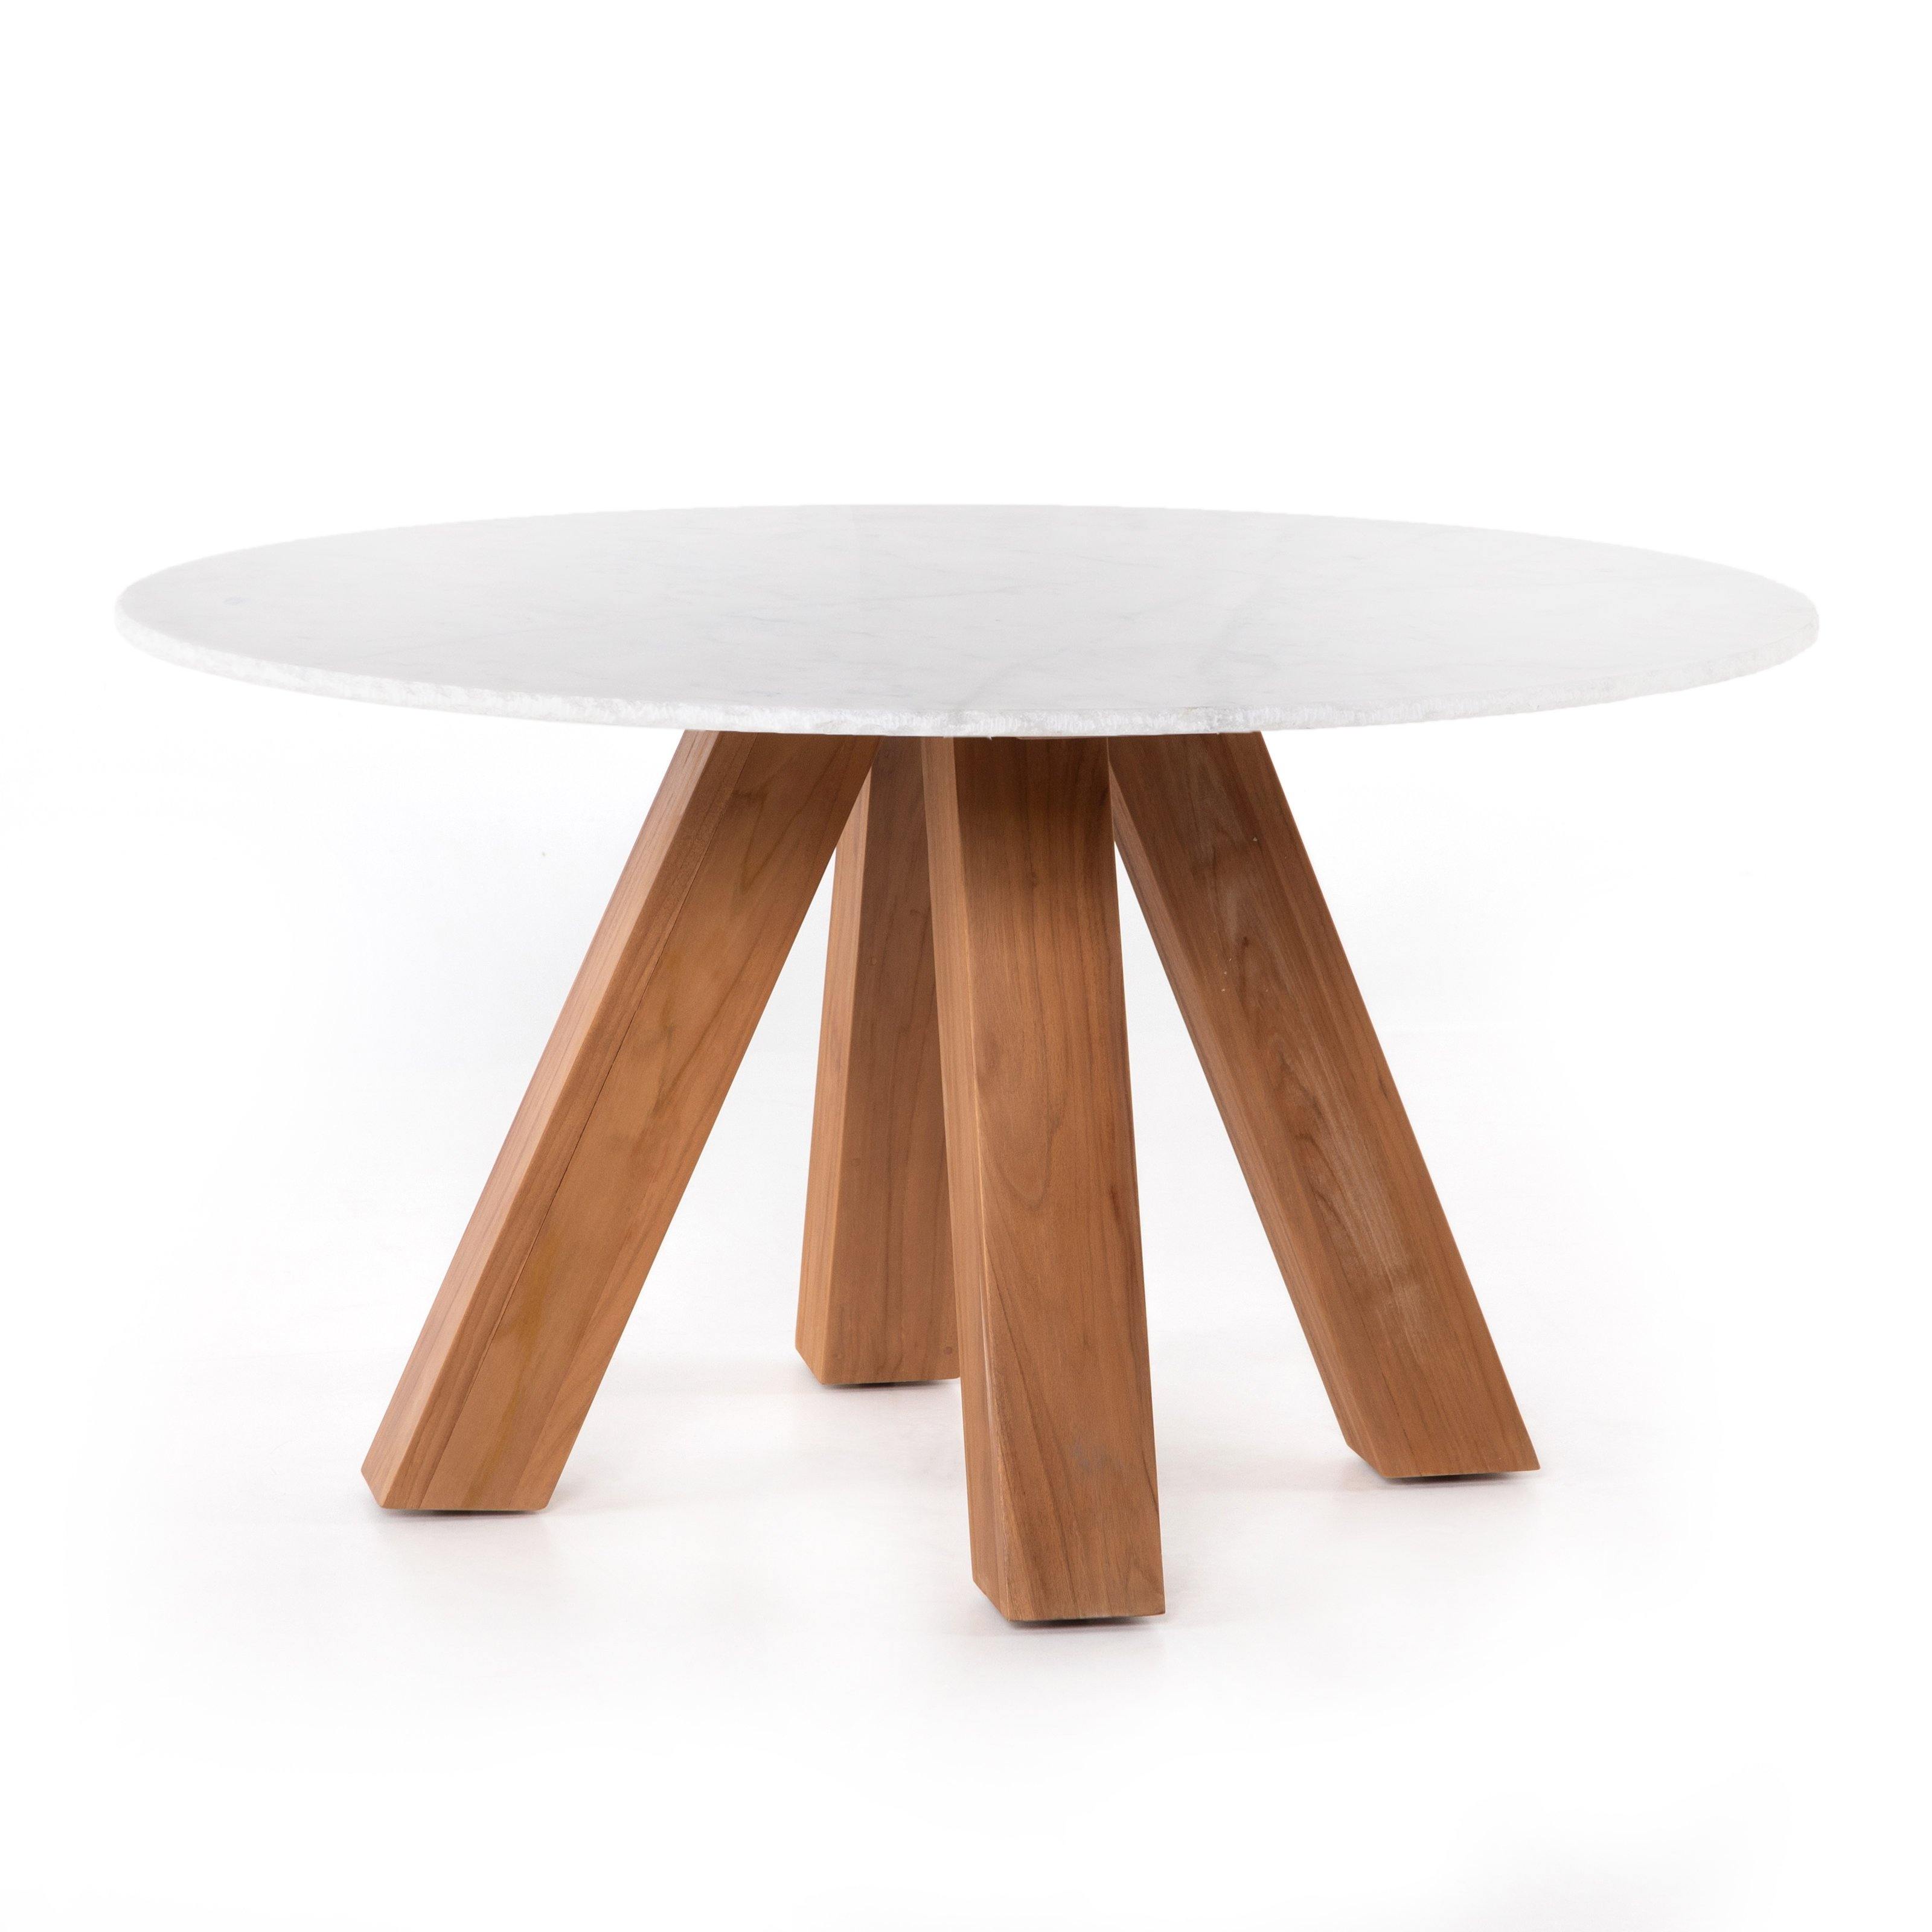 Sanders Marble Outdoor Dining Table - Reimagine Designs - Outdoor, outdoor dining table